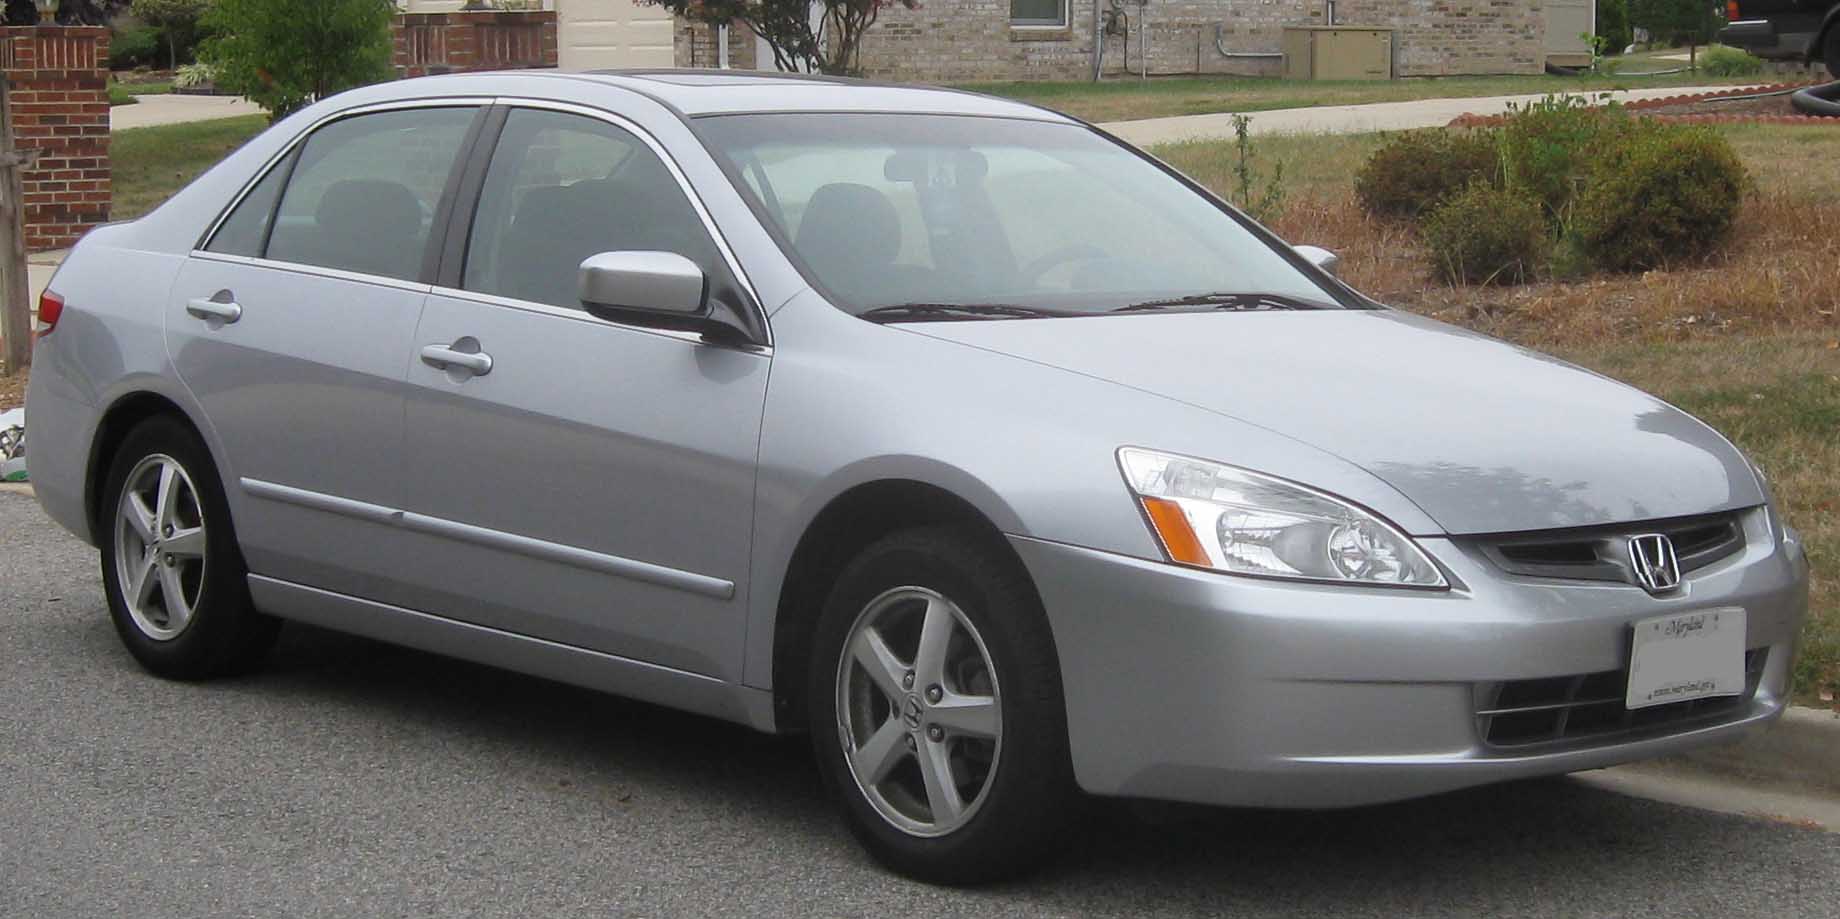 Honda Accord (North America seventh generation) - Wikipedia